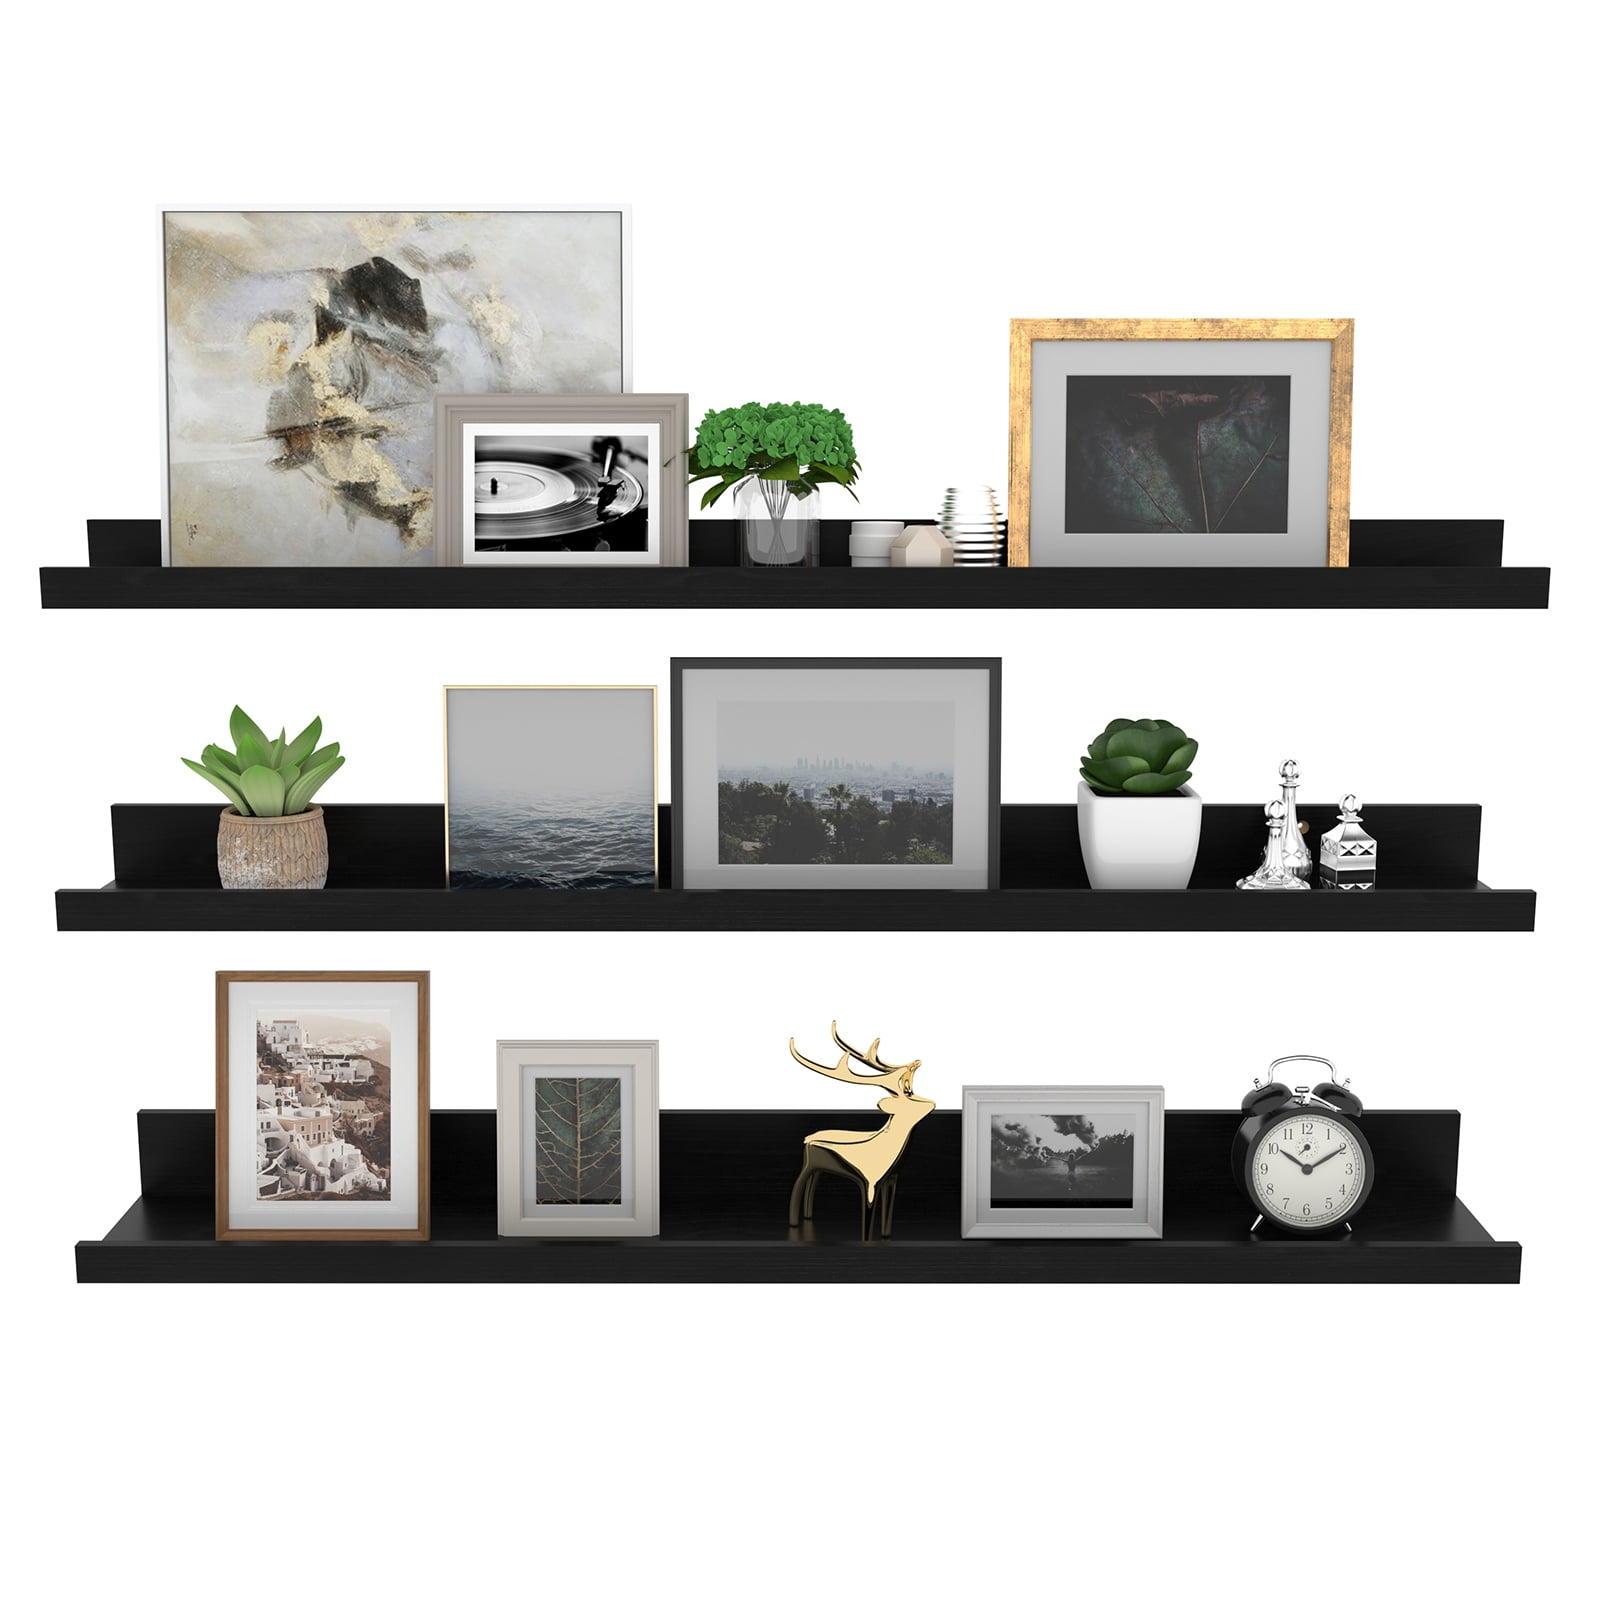 Vivense Neelix Floating Shelves Wall Mounted 3-Tier Wooden Shelf White Adjustable Rack Position